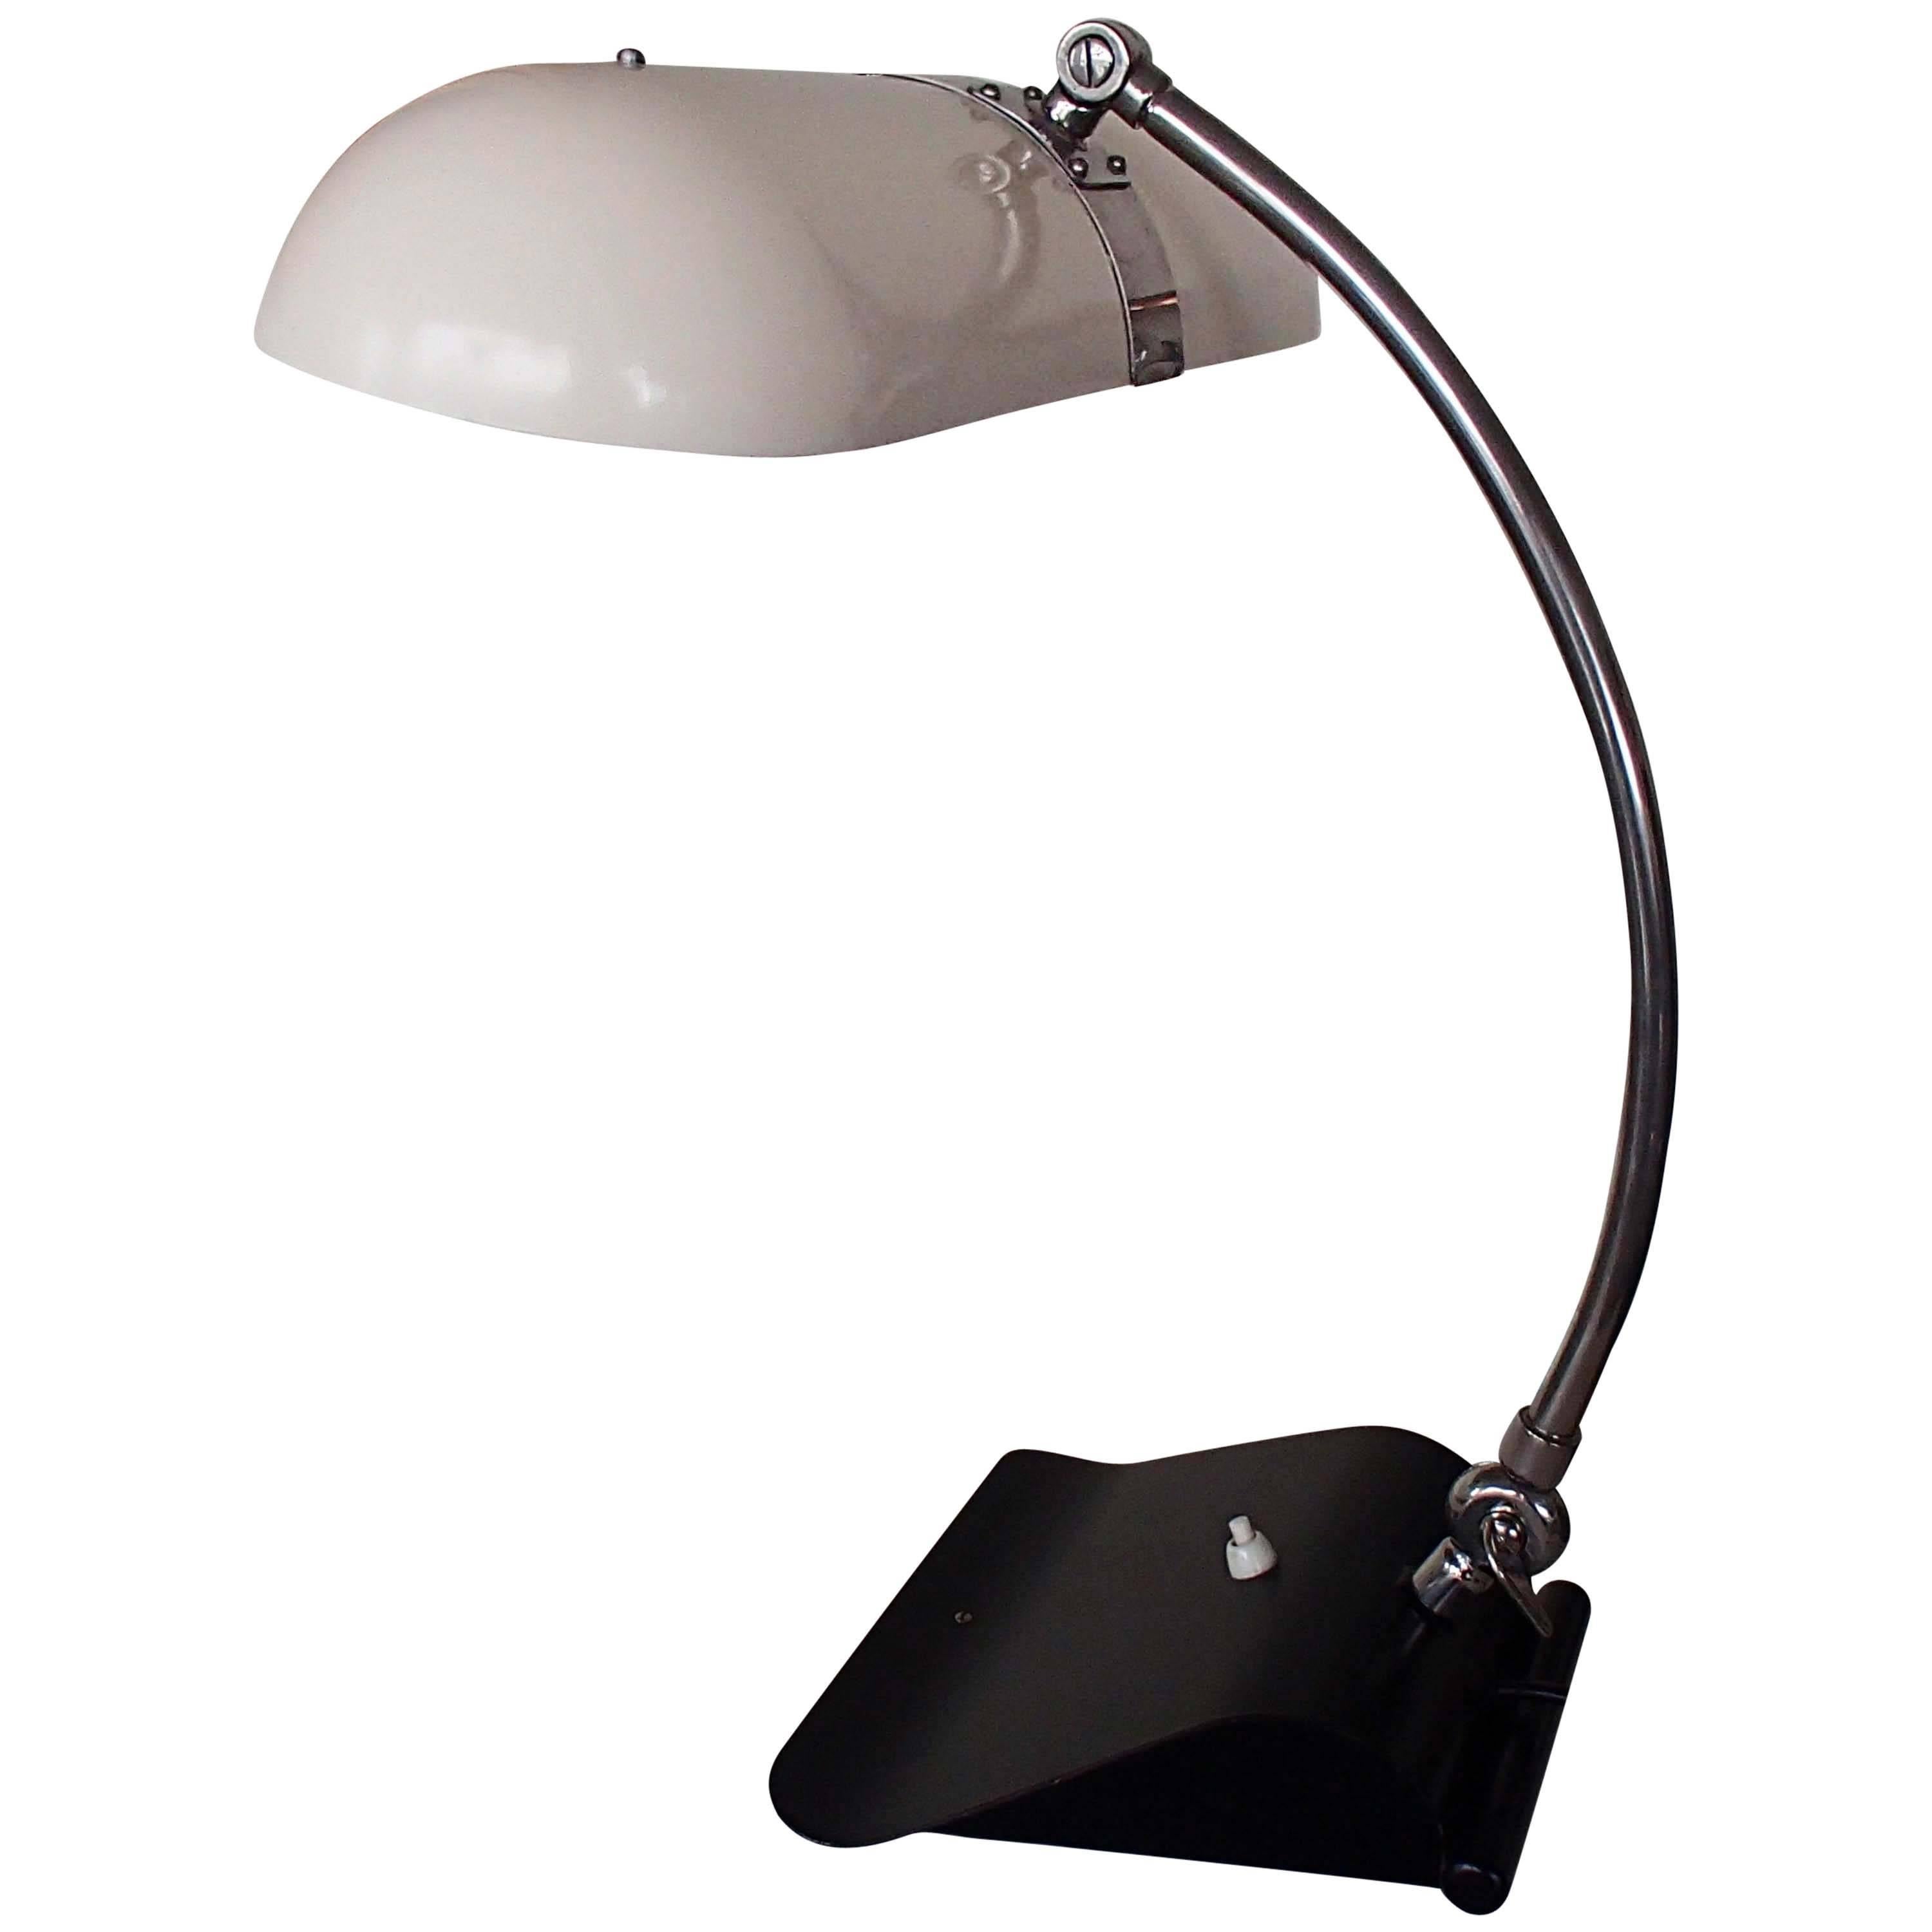 Big Bauhaus Black and White Neon Desk Lamp Chrome